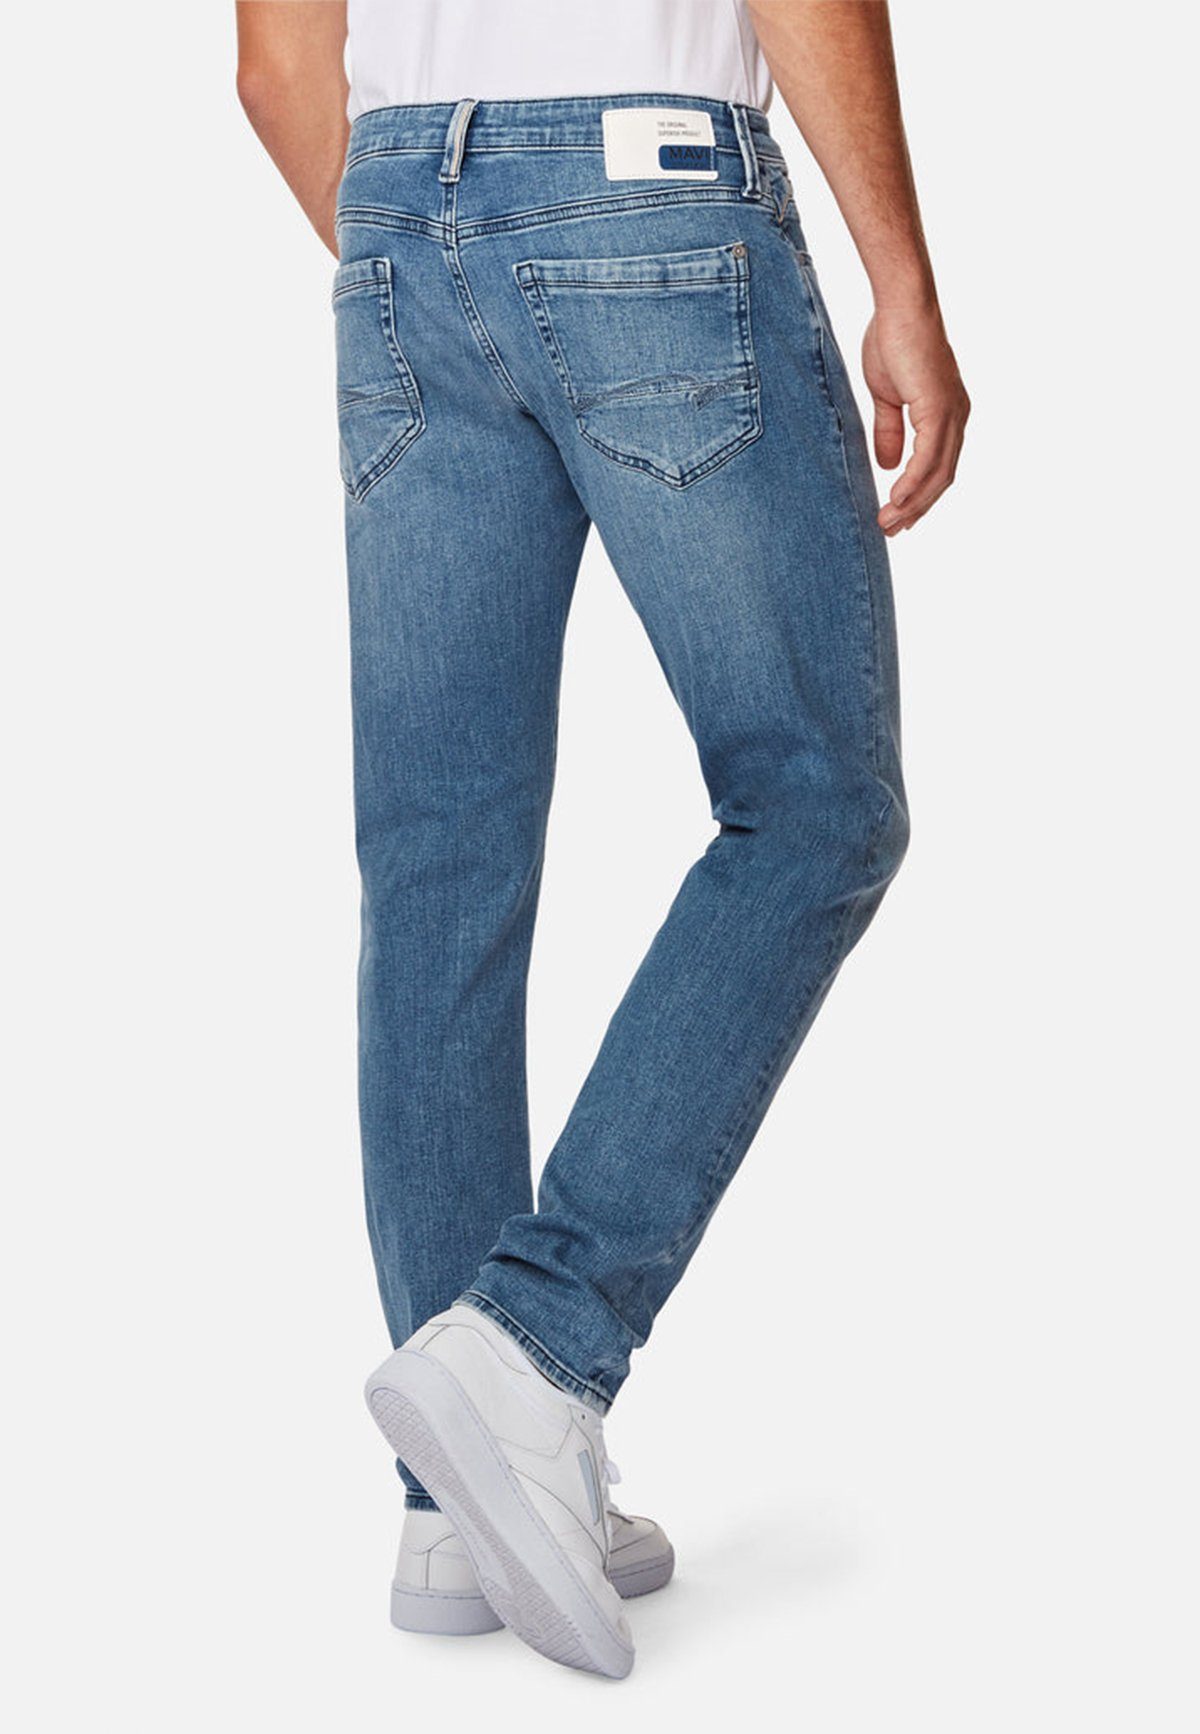 Mavi Slim YVES Fit in Hose Jeans Slim-fit-Jeans 4176 Blau Denim